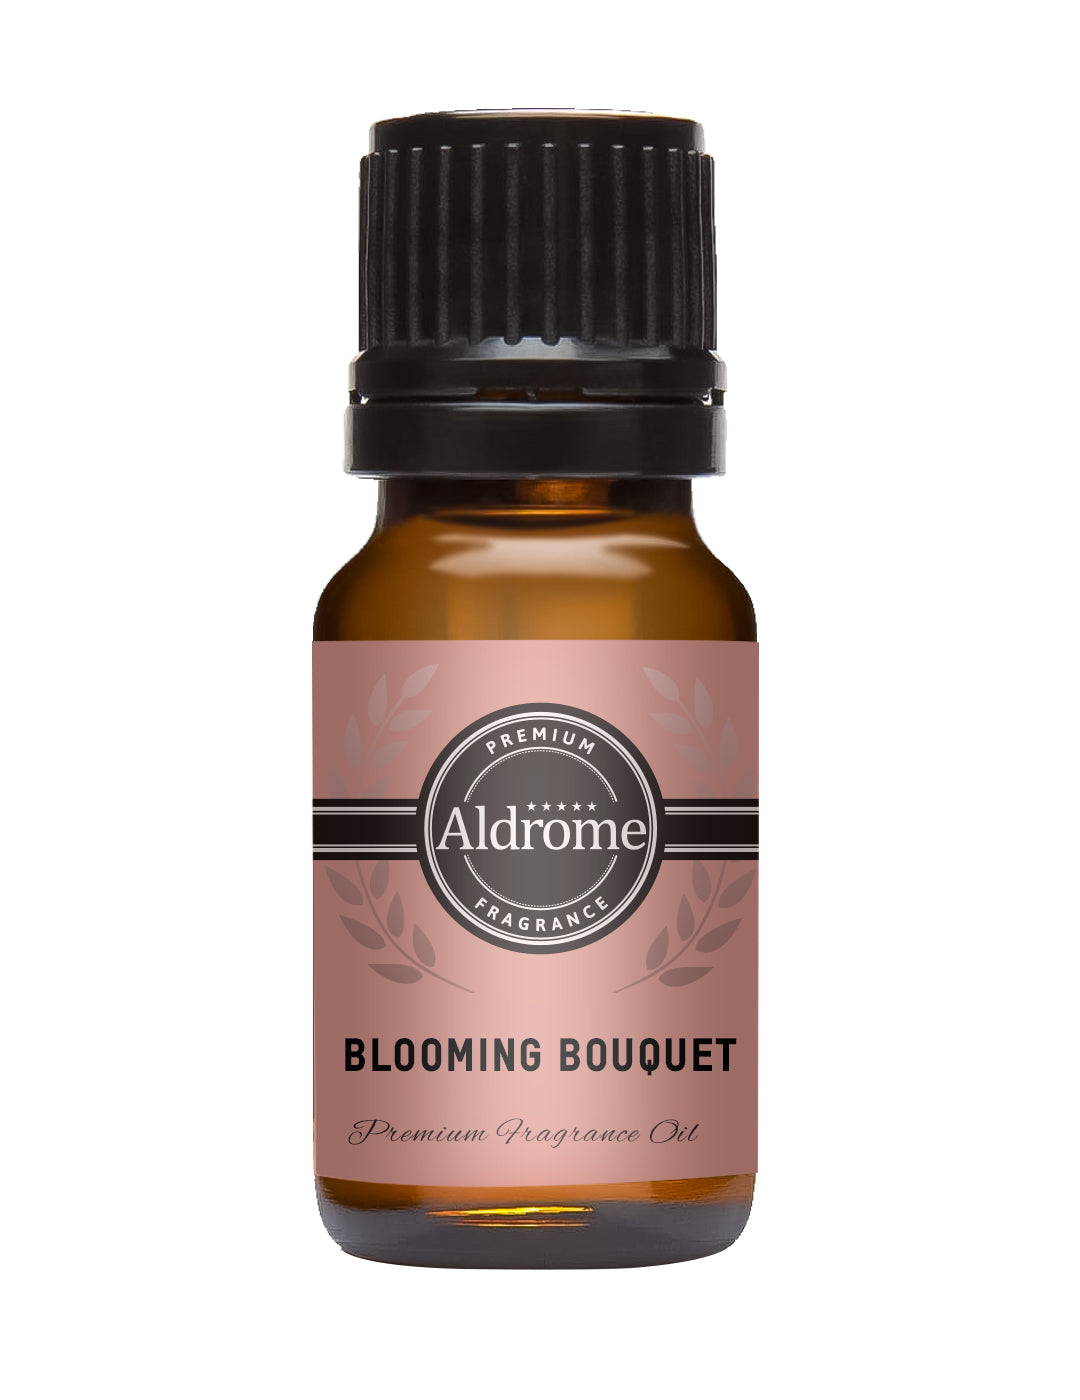 Blooming Bouquet Fragrance Oil - 10ml | Buy Blooming Bouquet Fragrance Oil | Aldrome Premium Fragrance Oil